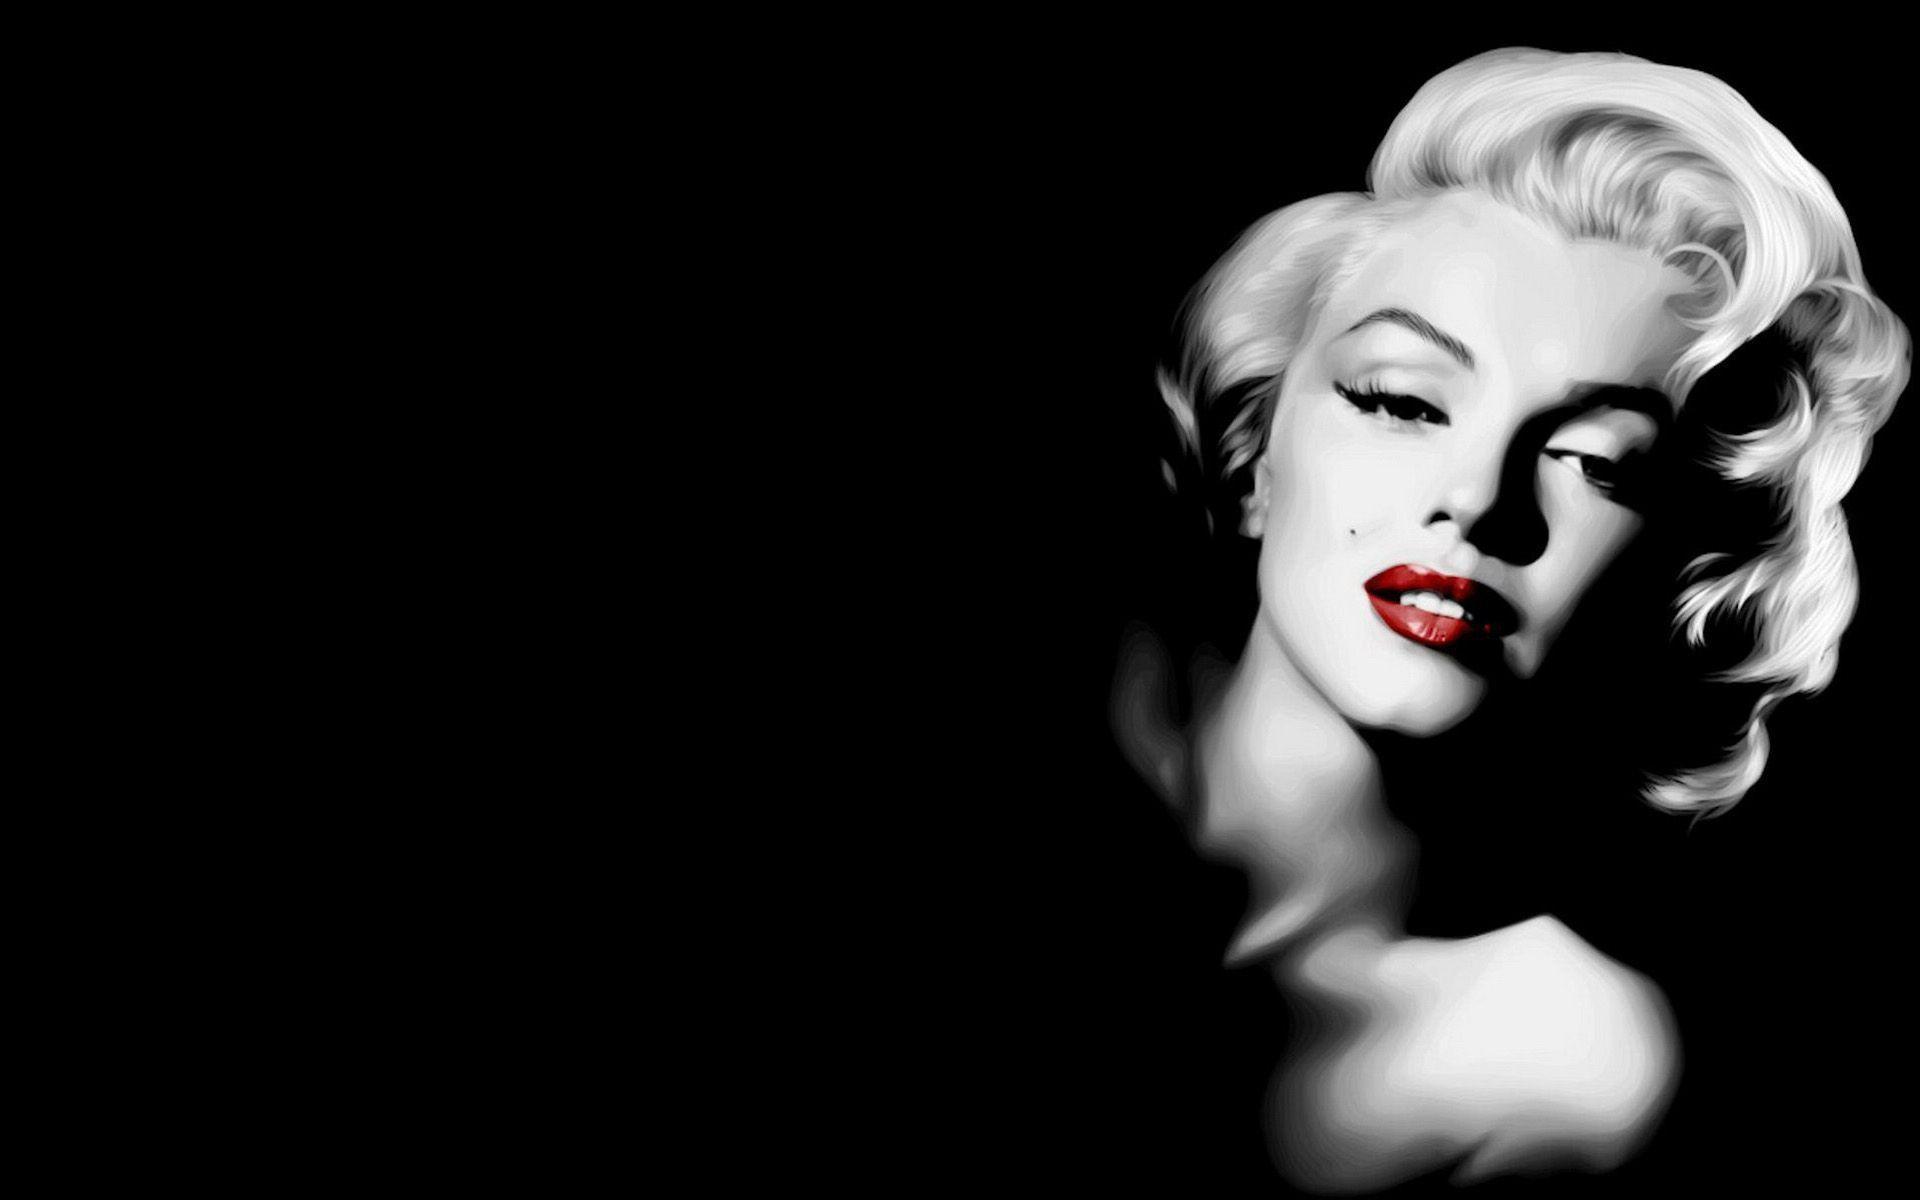 Marilyn monroe artistic wallpapers